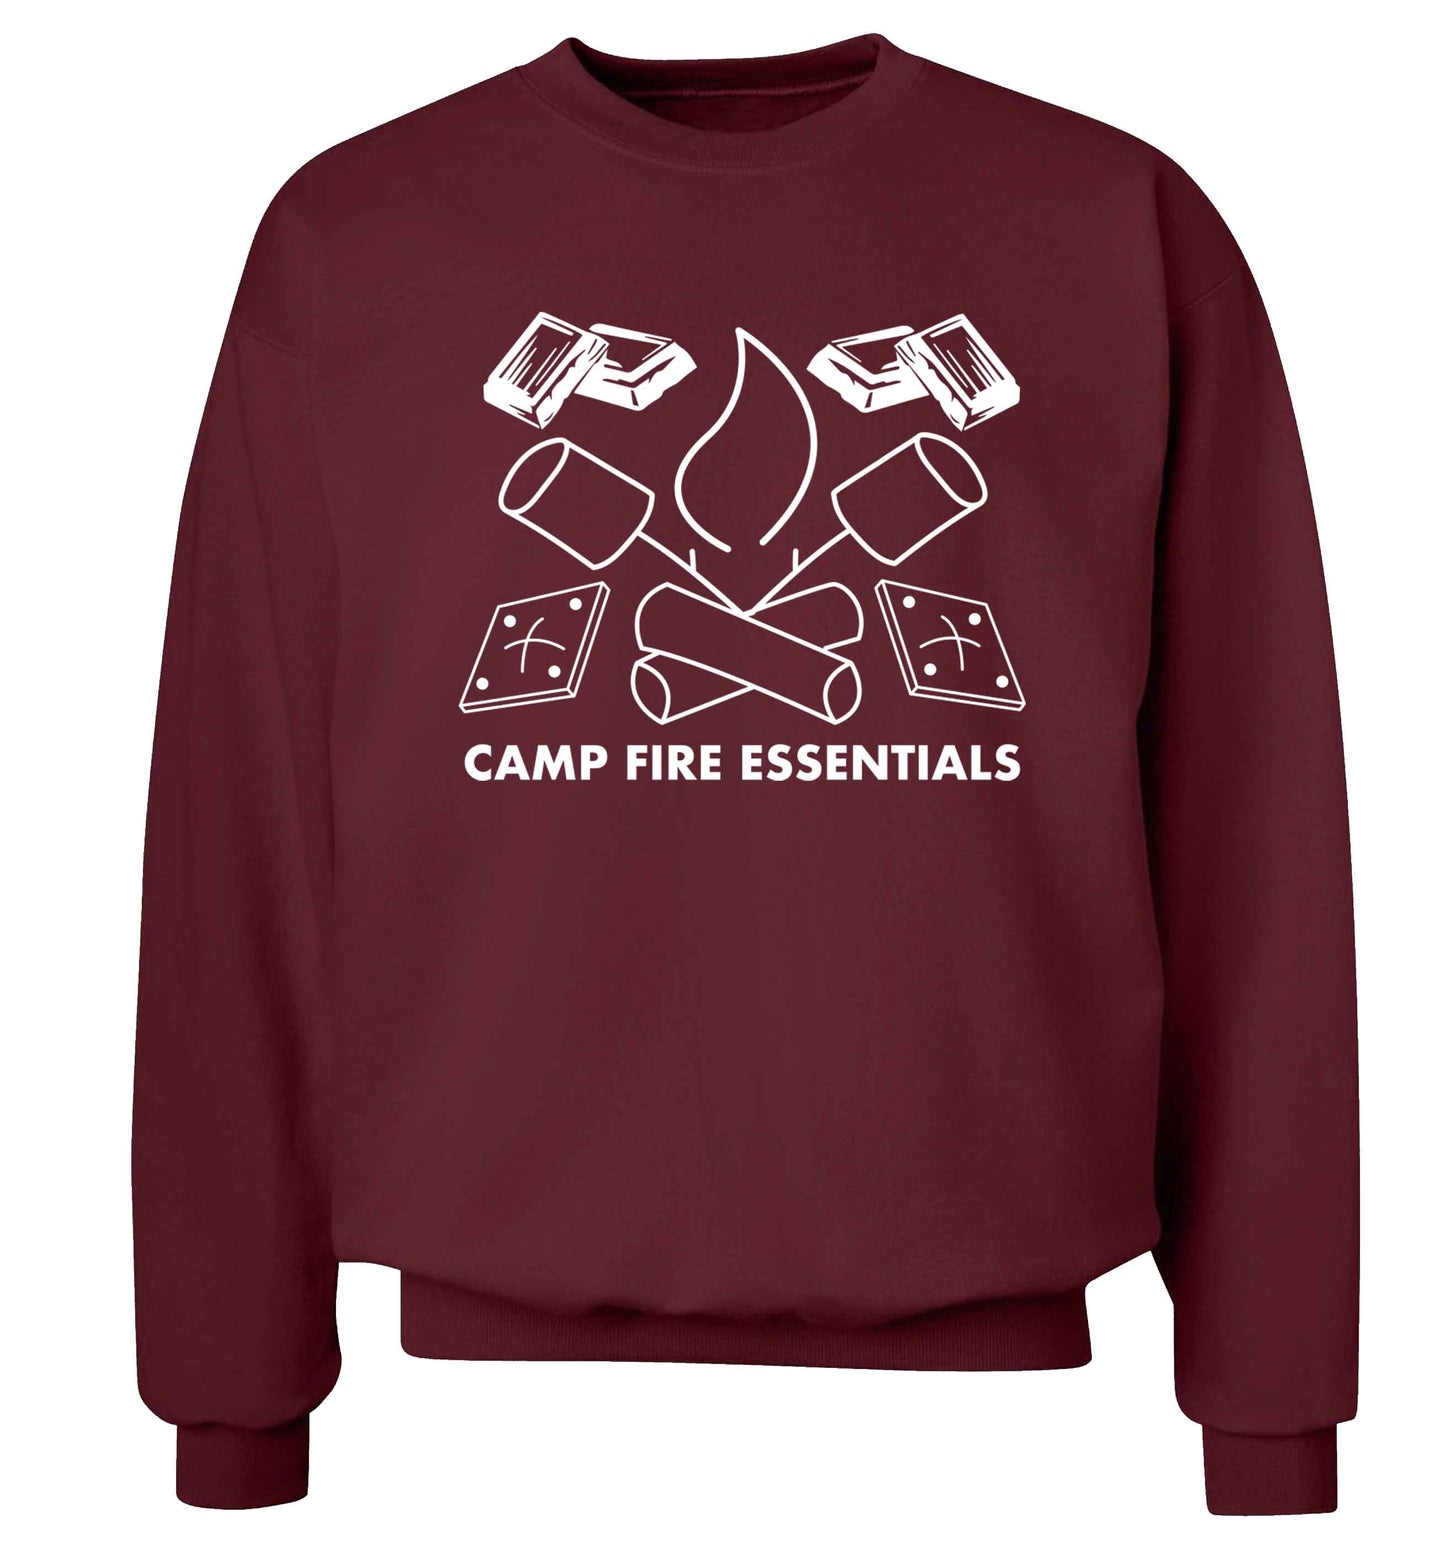 Campfire essentials Adult's unisex maroon Sweater 2XL